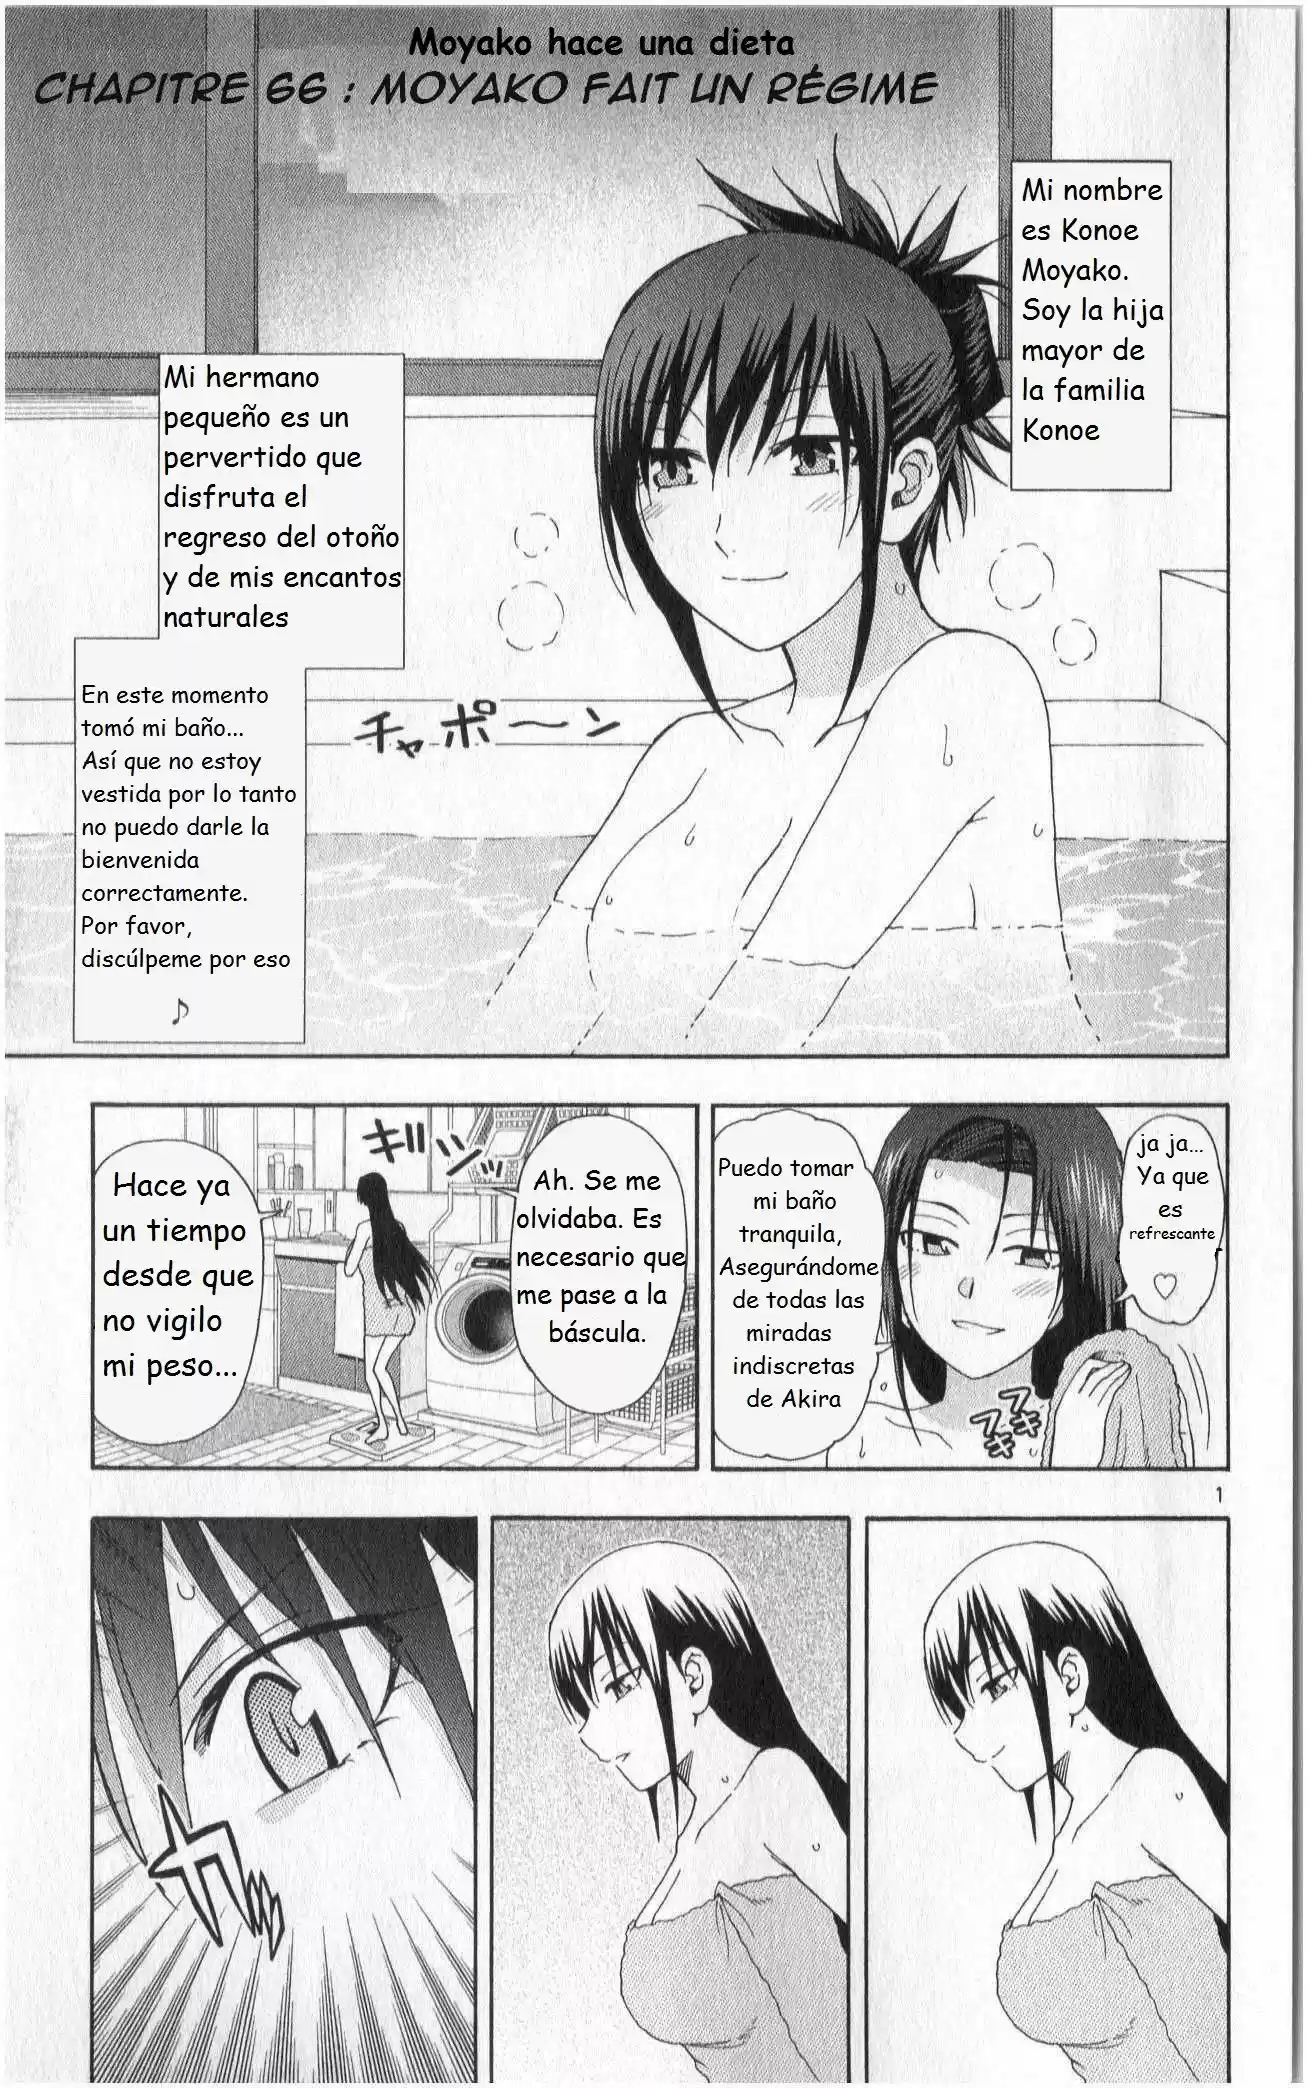 Ane Log: Moyako Neesan No Tomaranai Monologue: Chapter 66 - Page 1